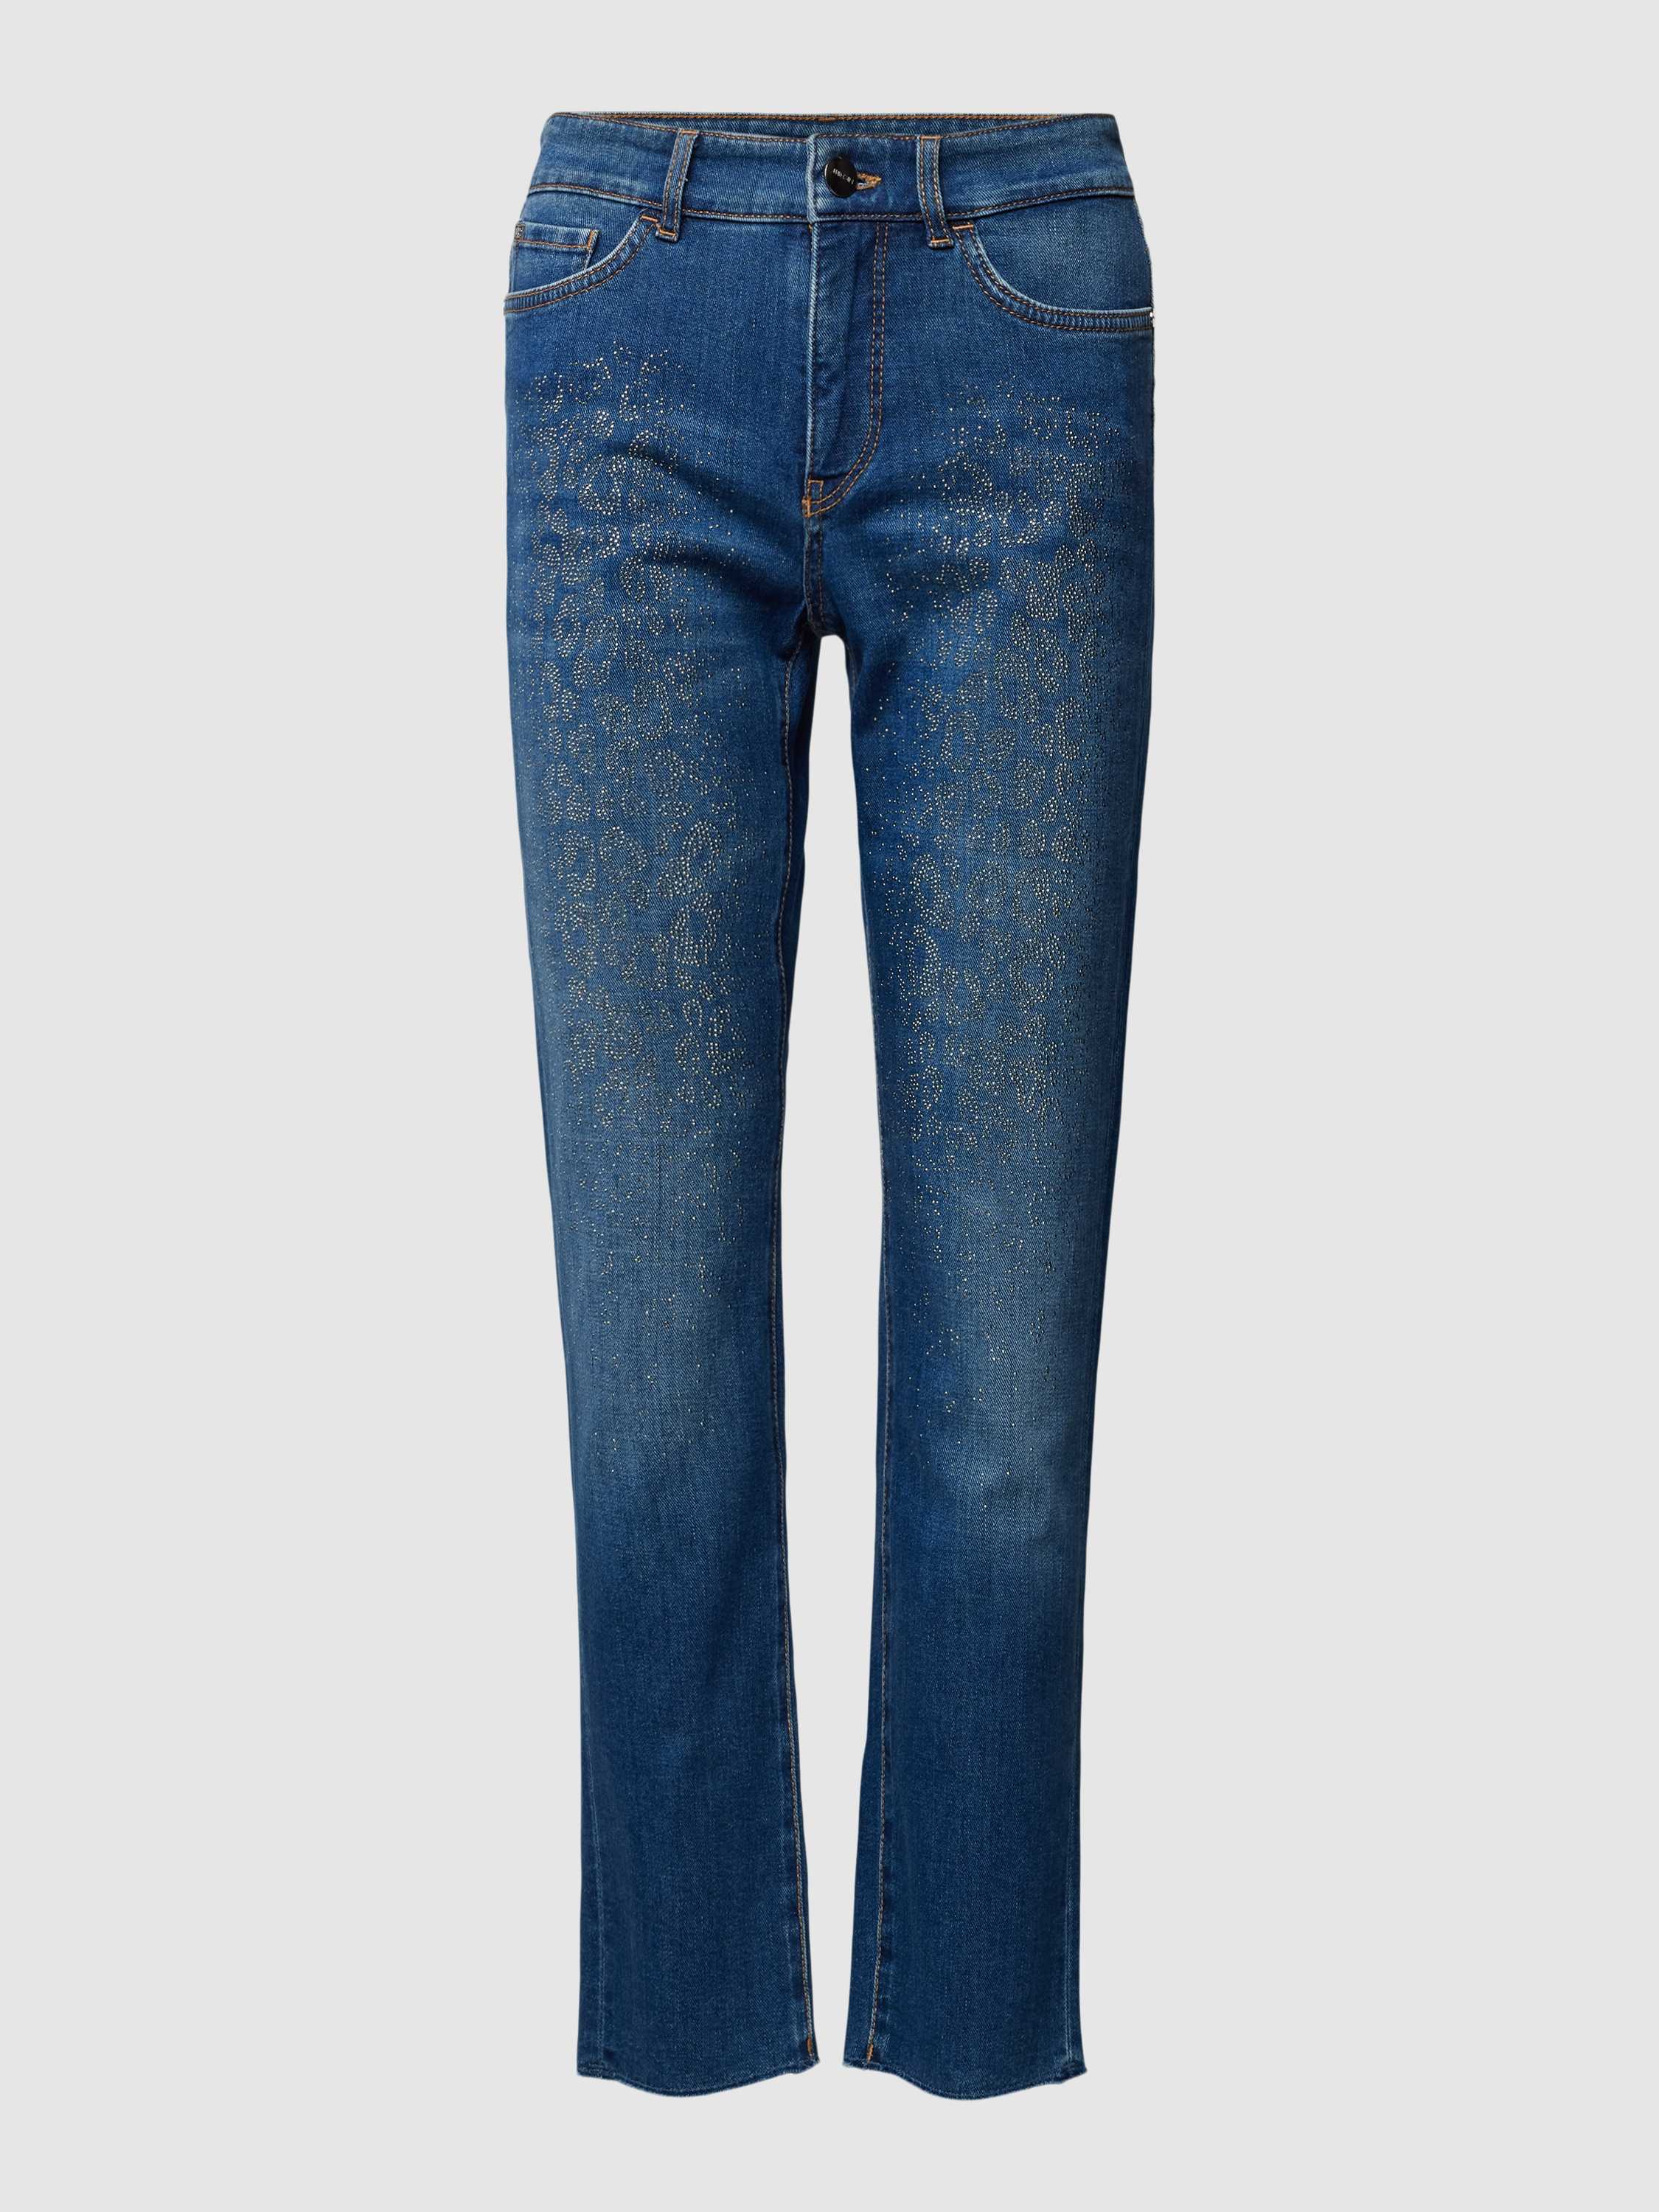 Slim fit jeans in 5-pocketmodel in de sale-marc cain 1